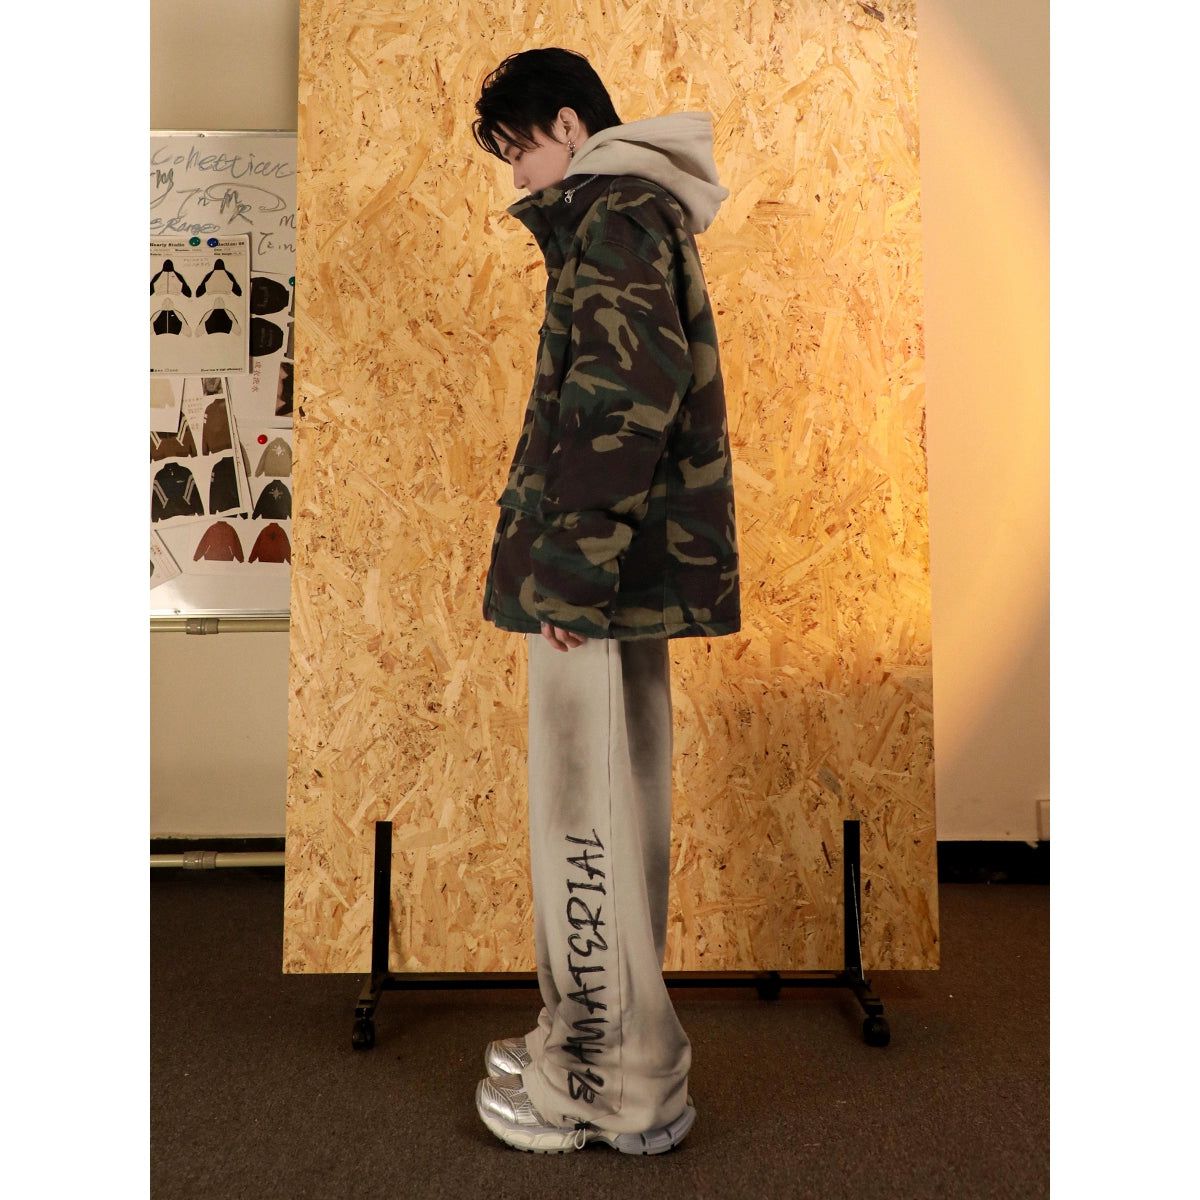 Multi-Pocket Camo Print Jacket Korean Street Fashion Jacket By Mr Nearly Shop Online at OH Vault